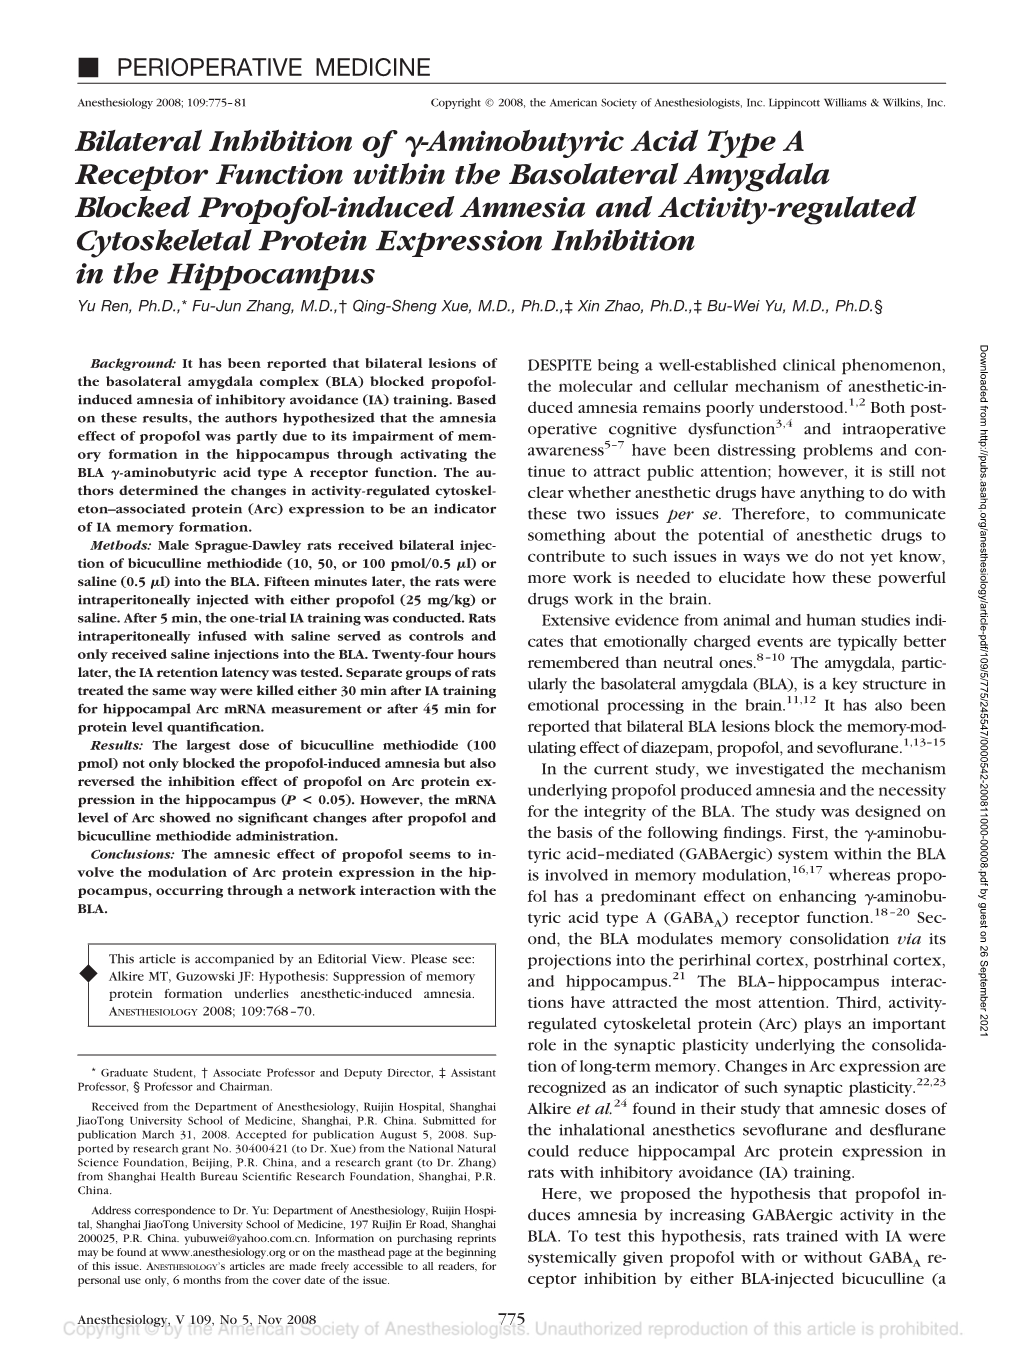 Aminobutyric Acid Type a Receptor Function Within the Basolateral Amygdala Blocked Propofol-Induced